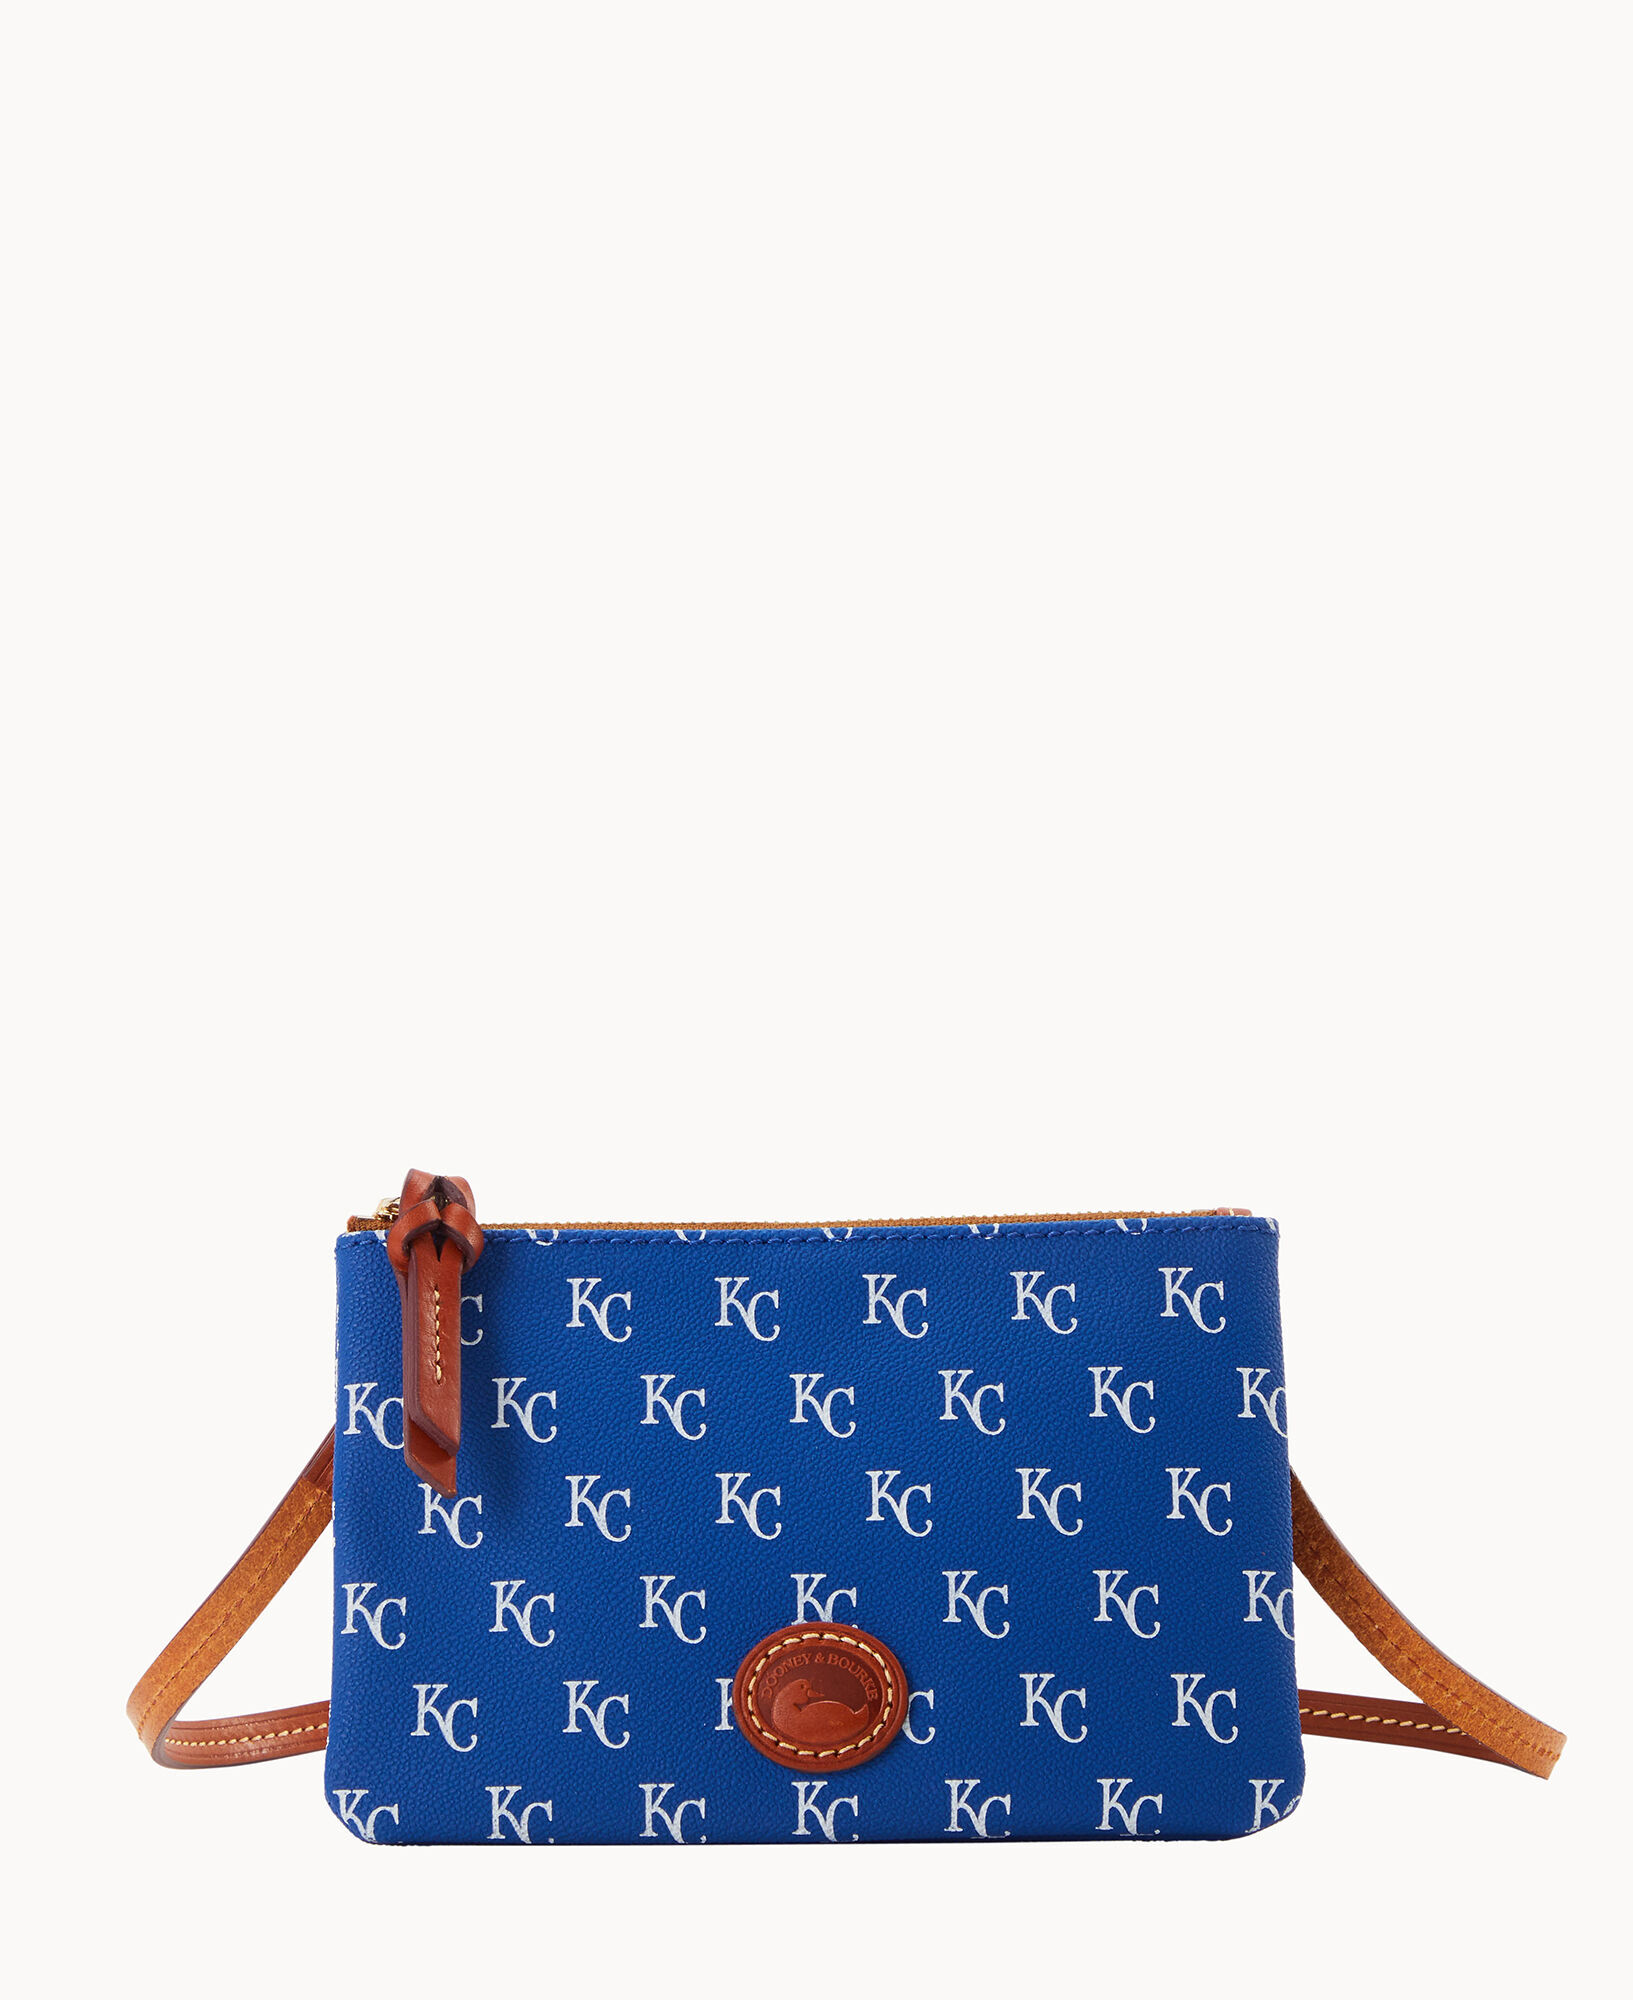 Dooney and Bourke KC Royals purse